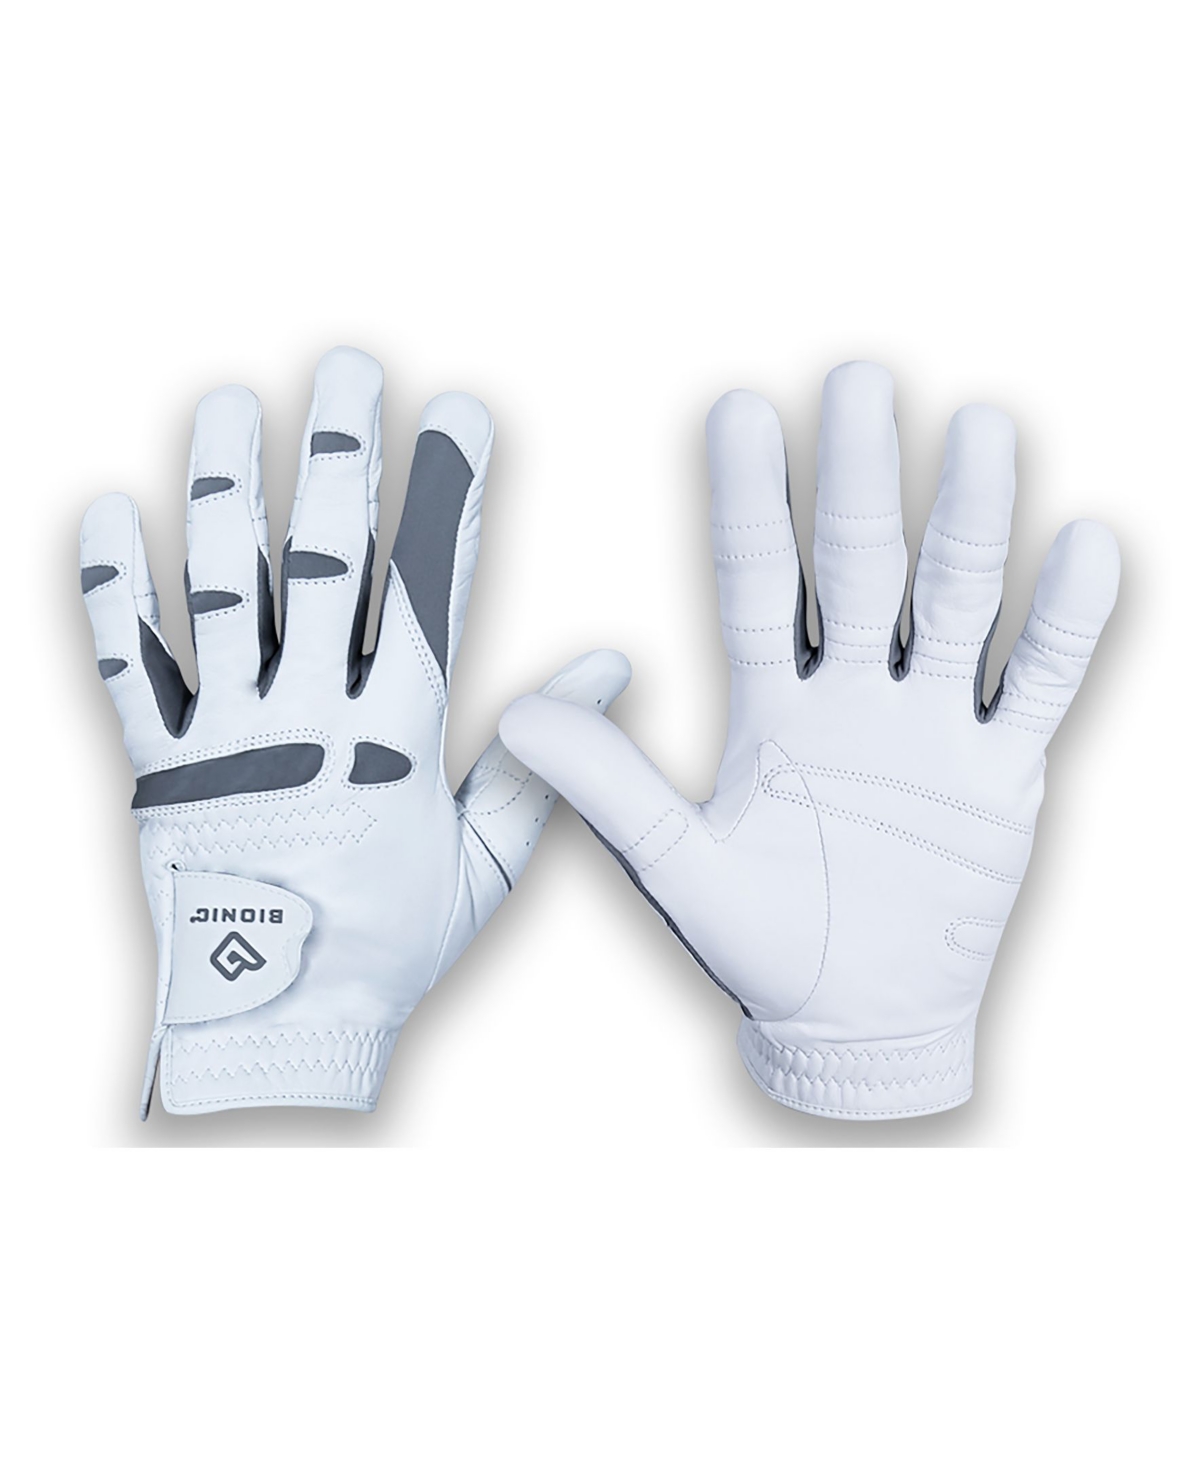 Save 30% on Men's Performance Grip Pro Golf Glove - Right Hand